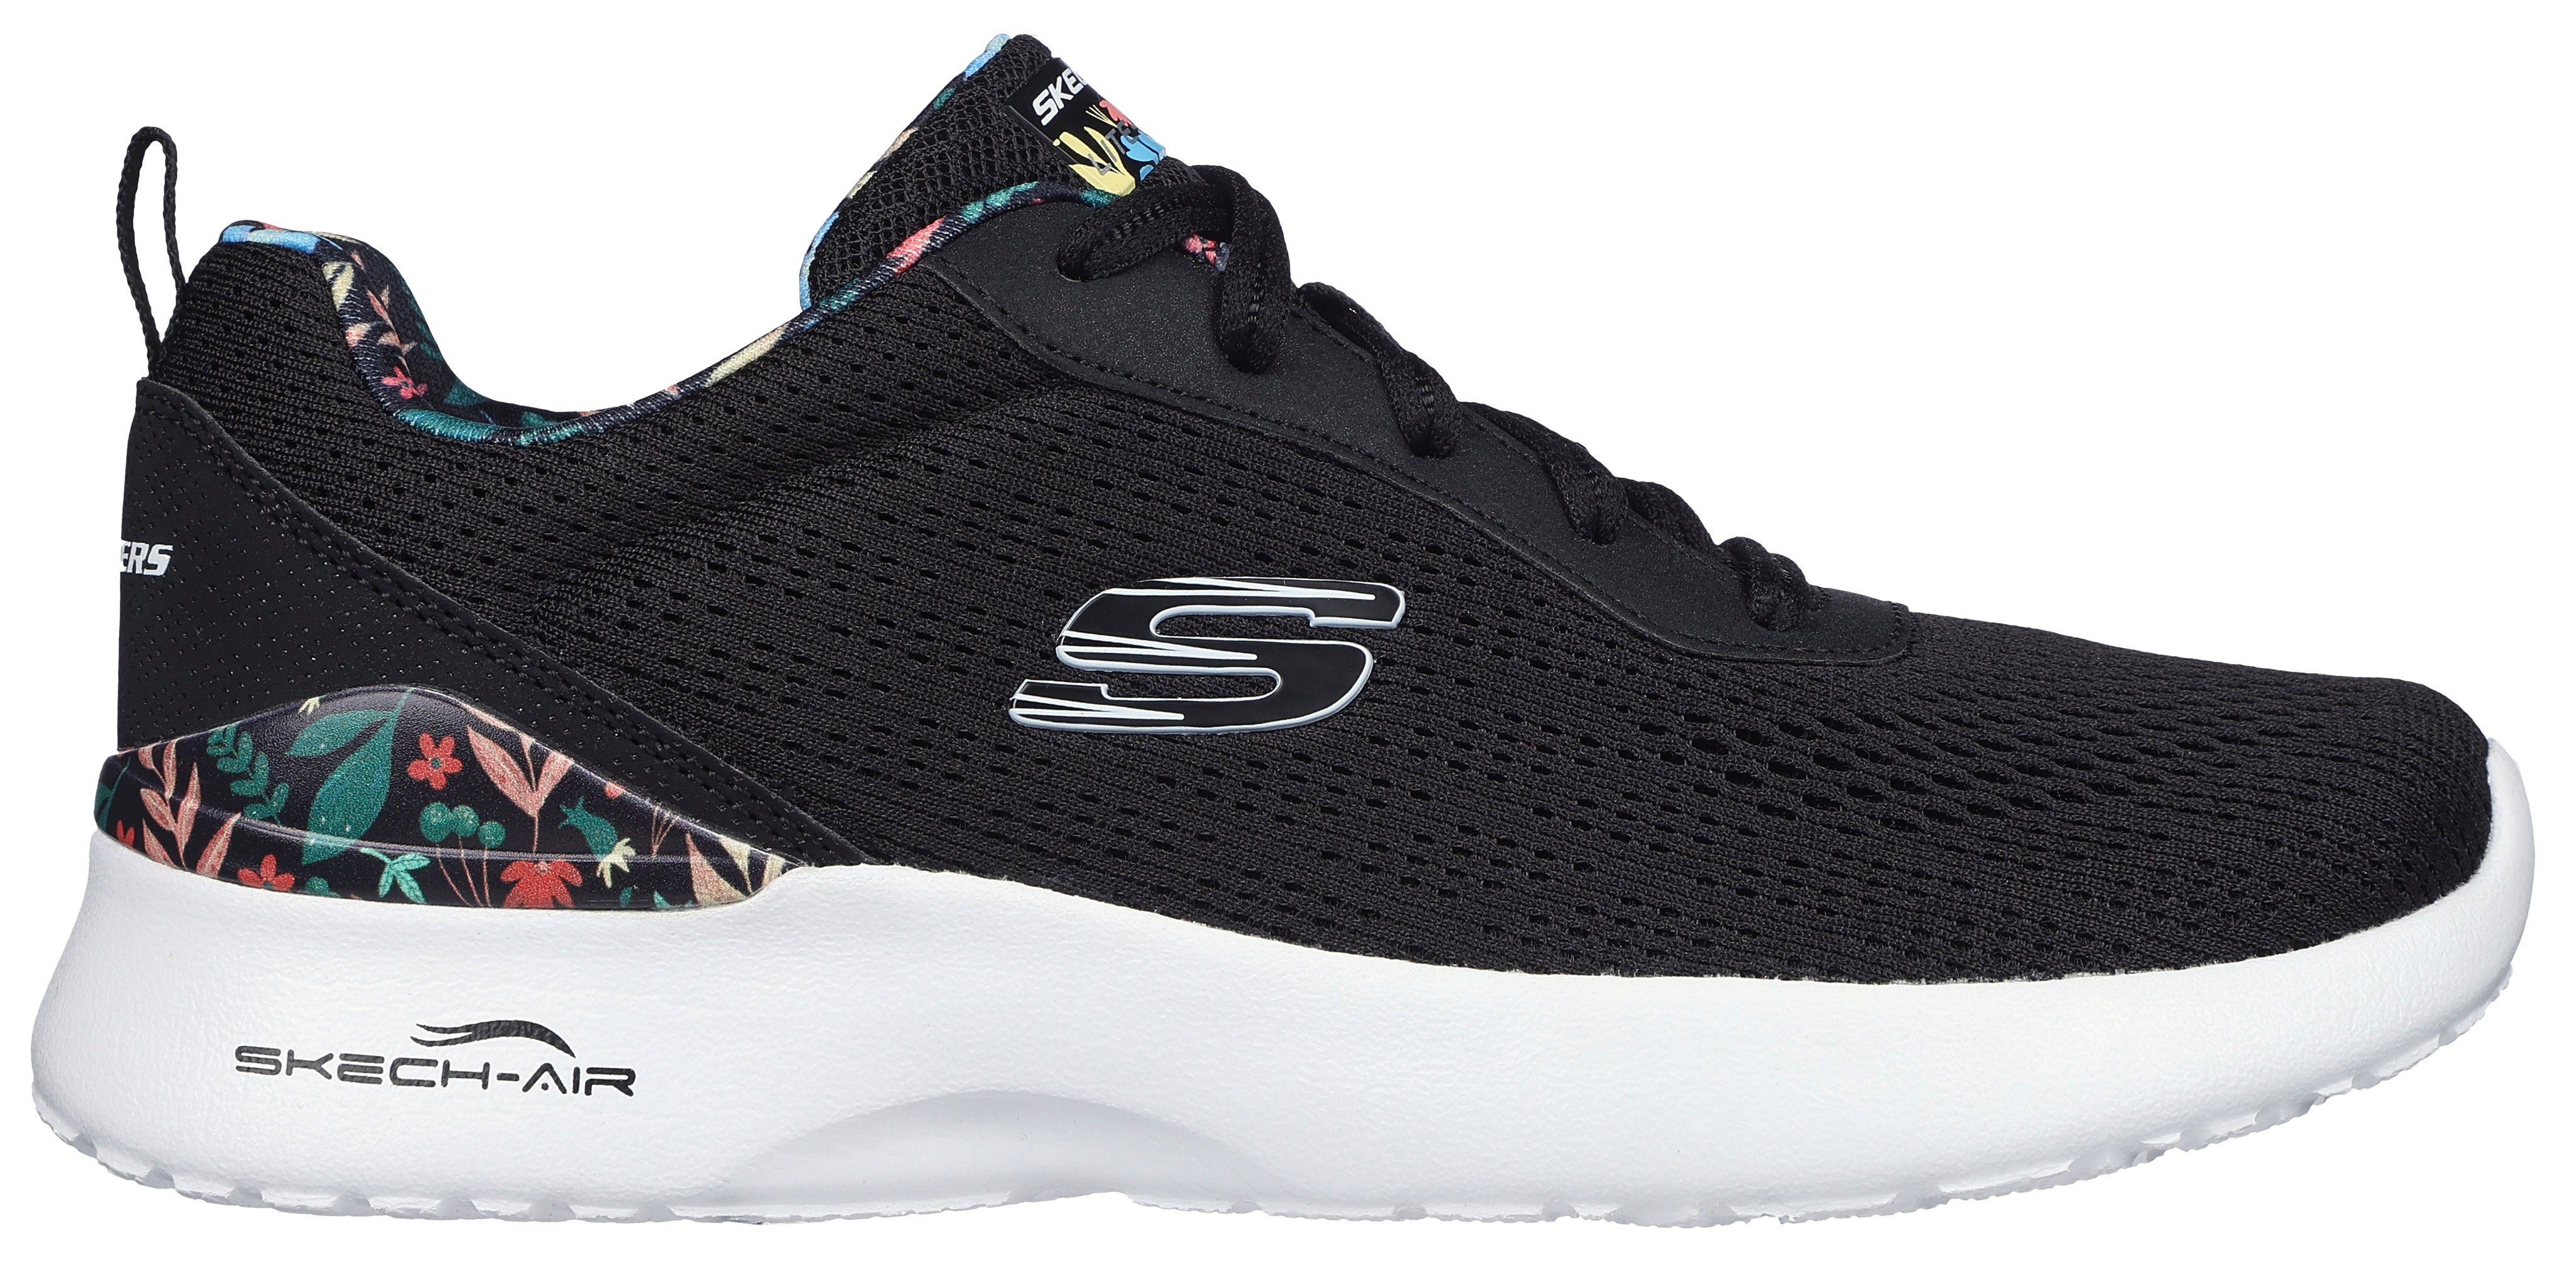 DYNAMIGHT Ferse buntem mit schwarz-meliert Print Sneaker der an LAID SKECH-AIR OUT Skechers